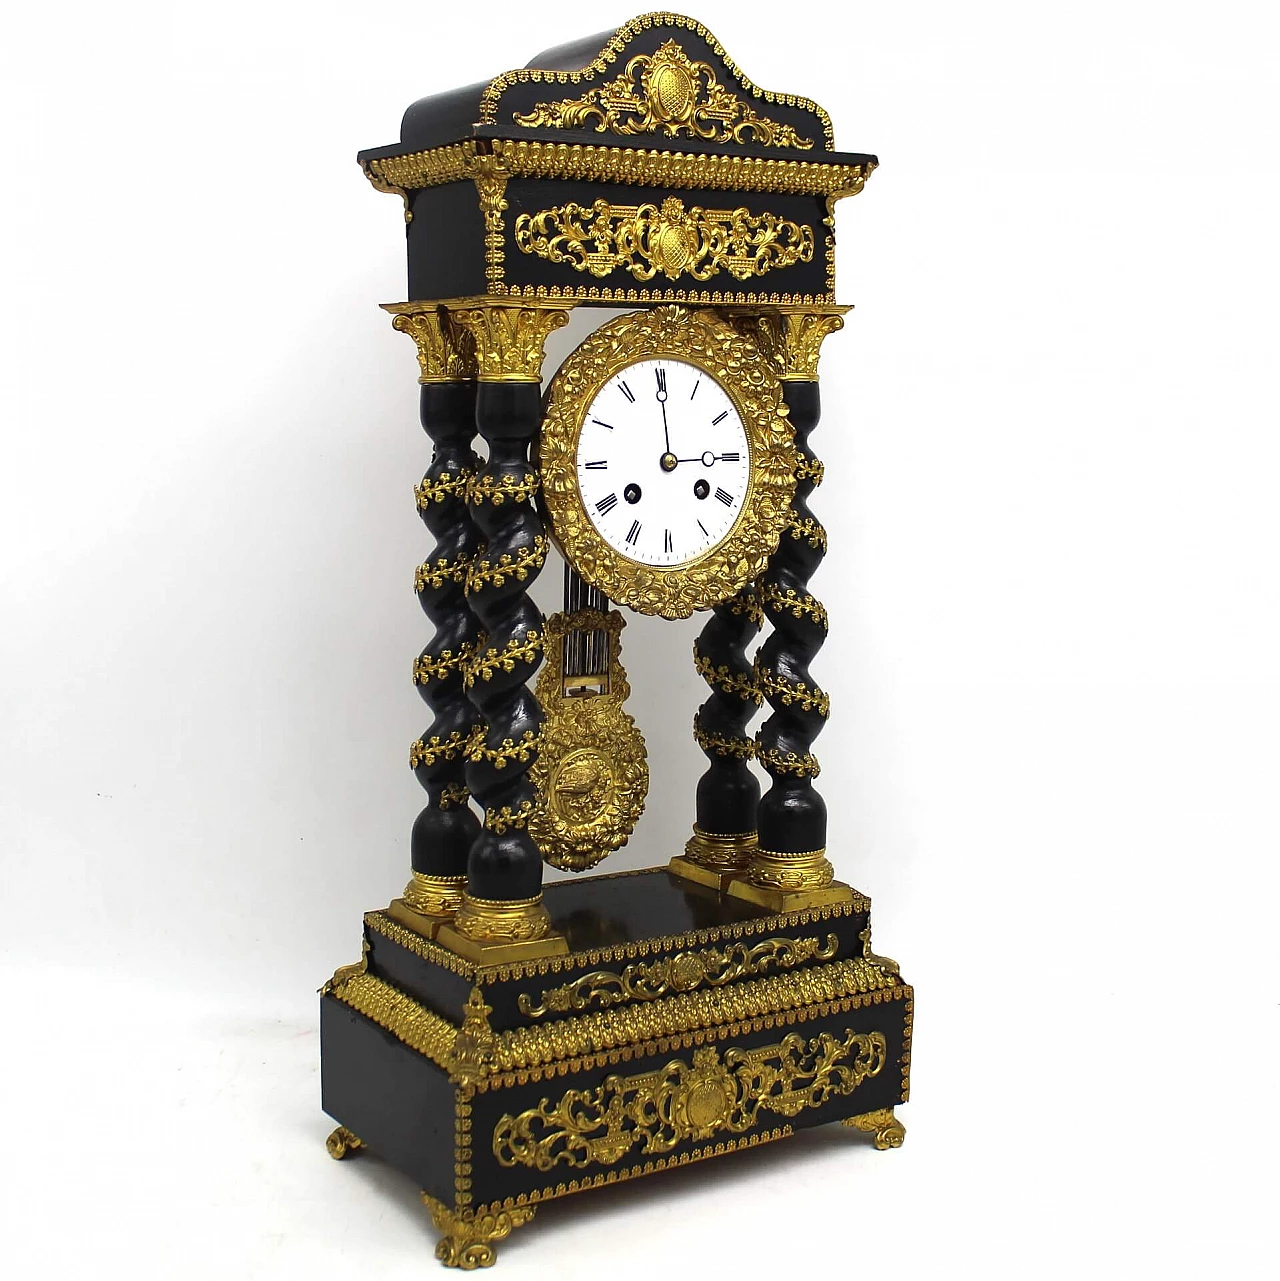 Napoleon III pendulum clock in ebonized wood and gilded bronzes, 19th century. 1336766